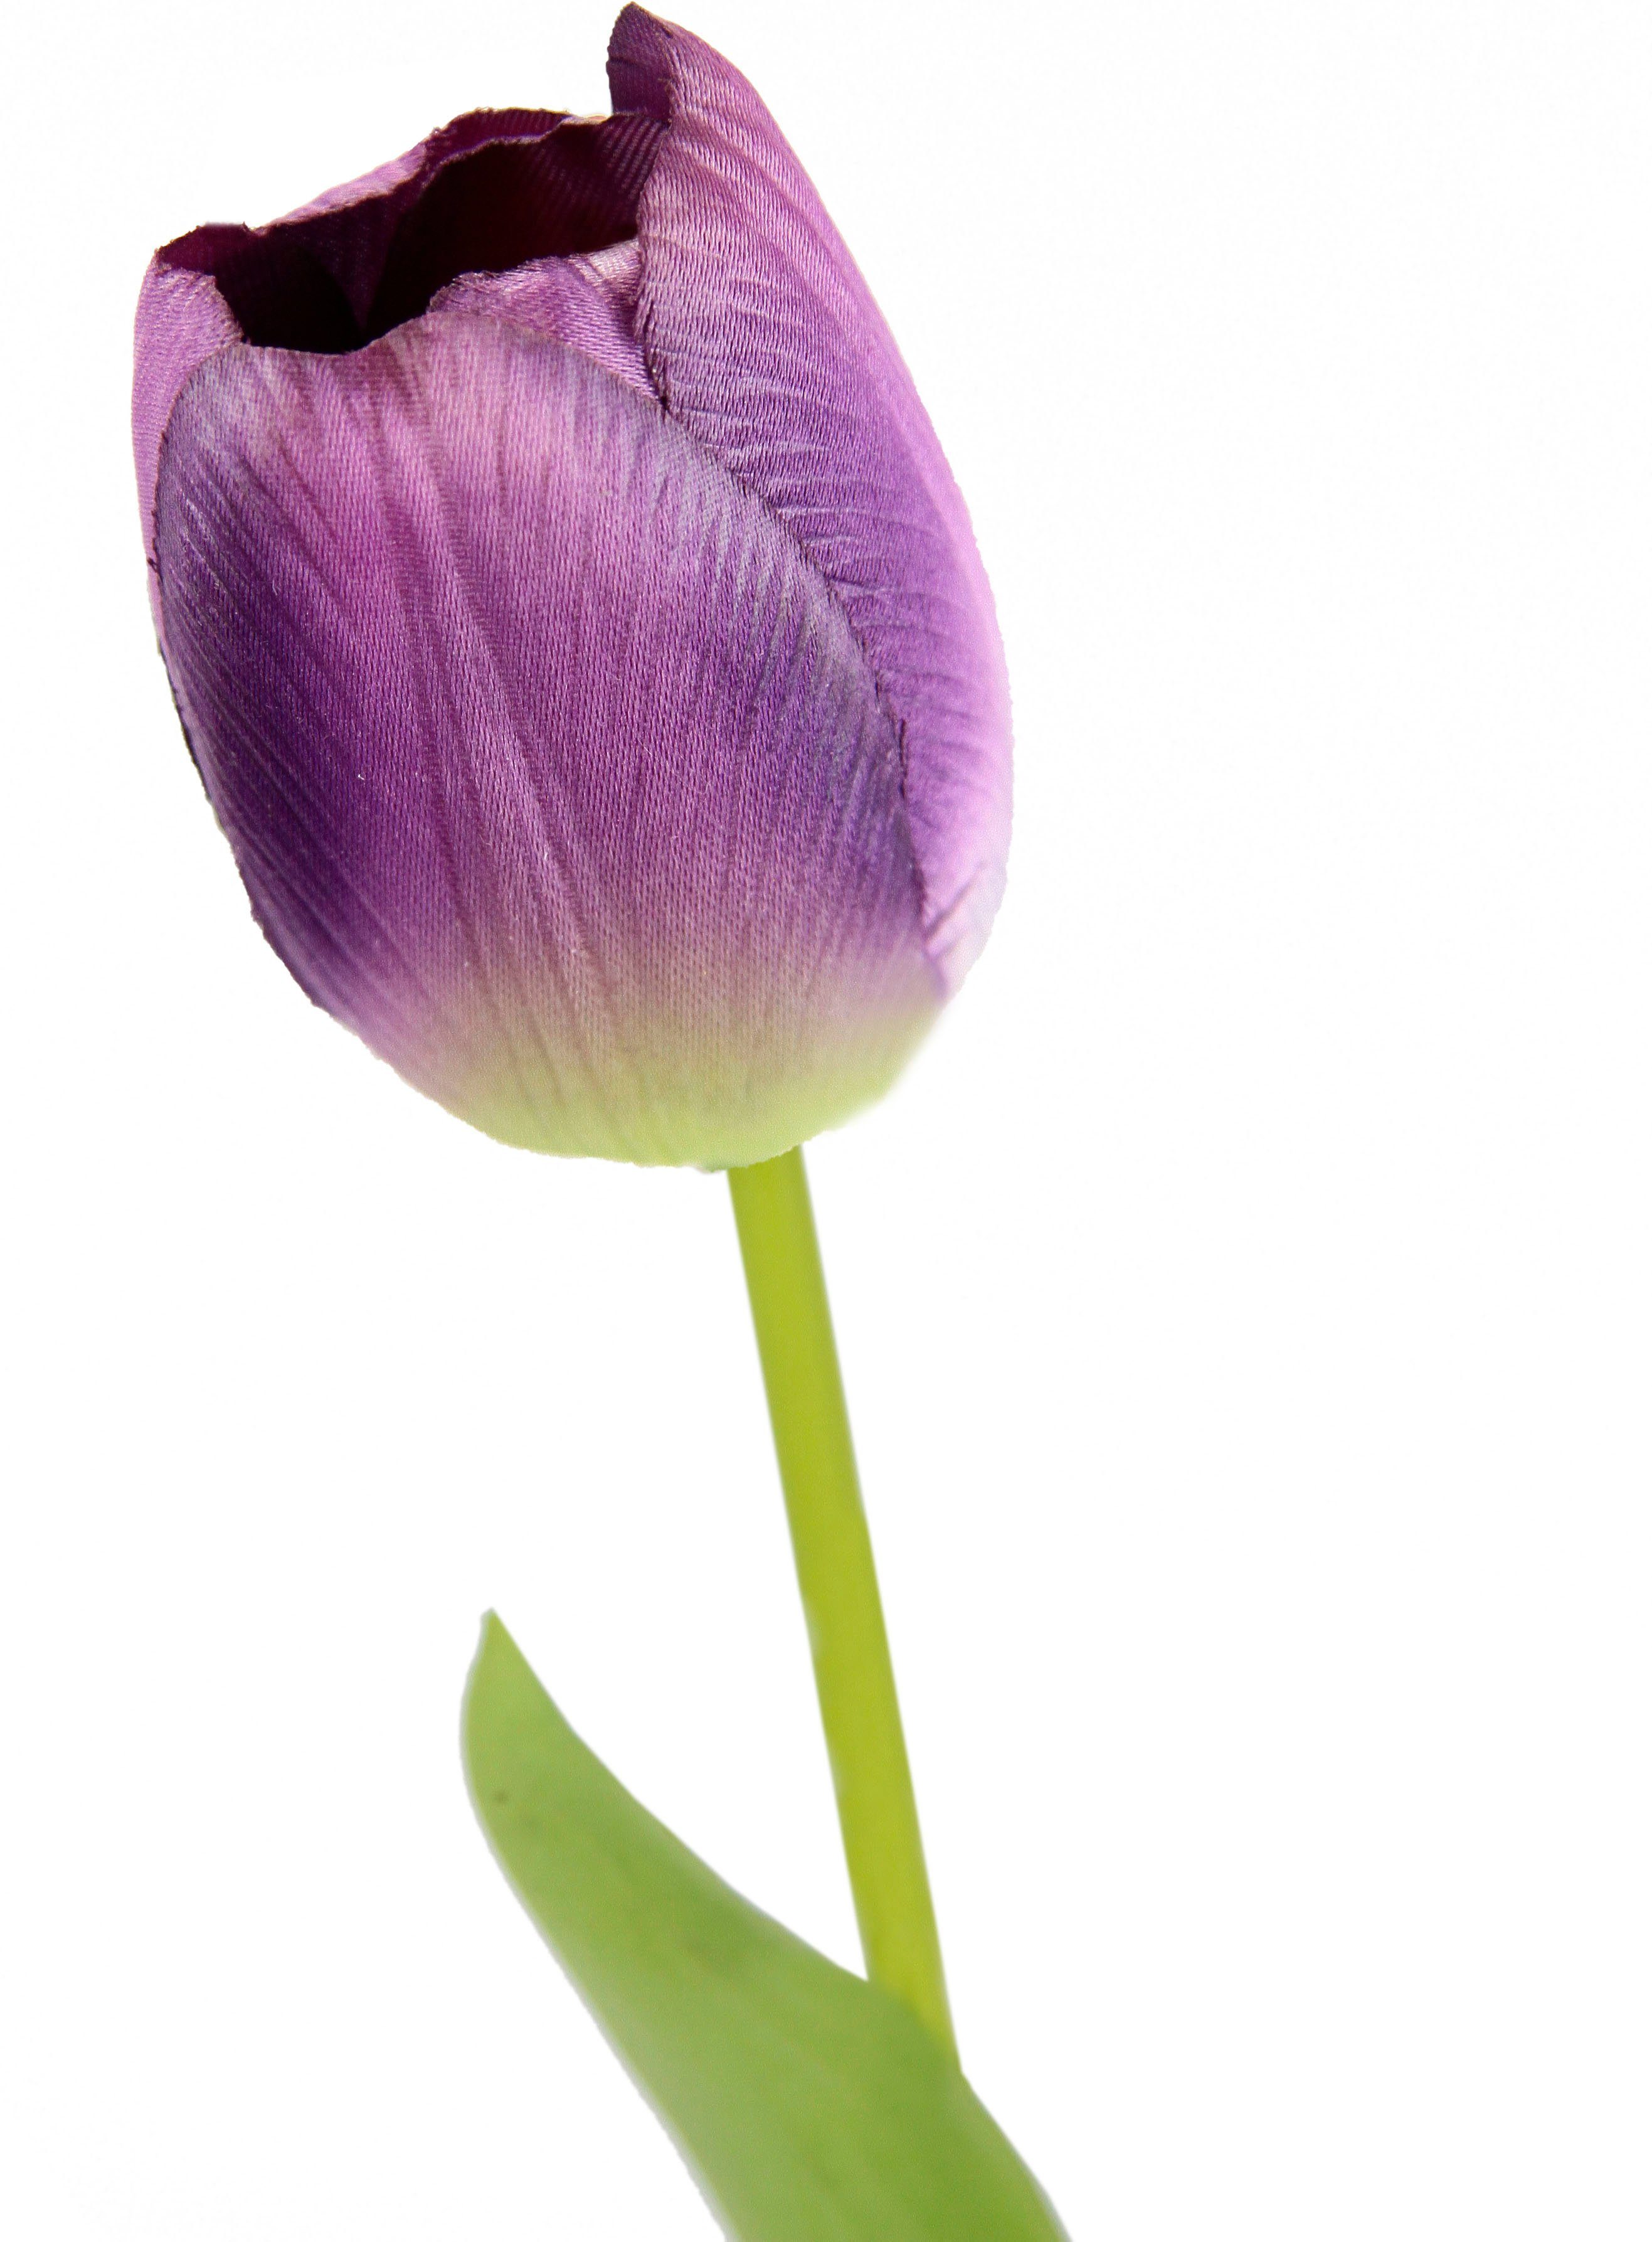 Kunstblume Real Touch Tulpen, I.GE.A., Set Höhe Kunstblumen, künstliche Tulpenknospen, Stielblume 5er cm, violett 67